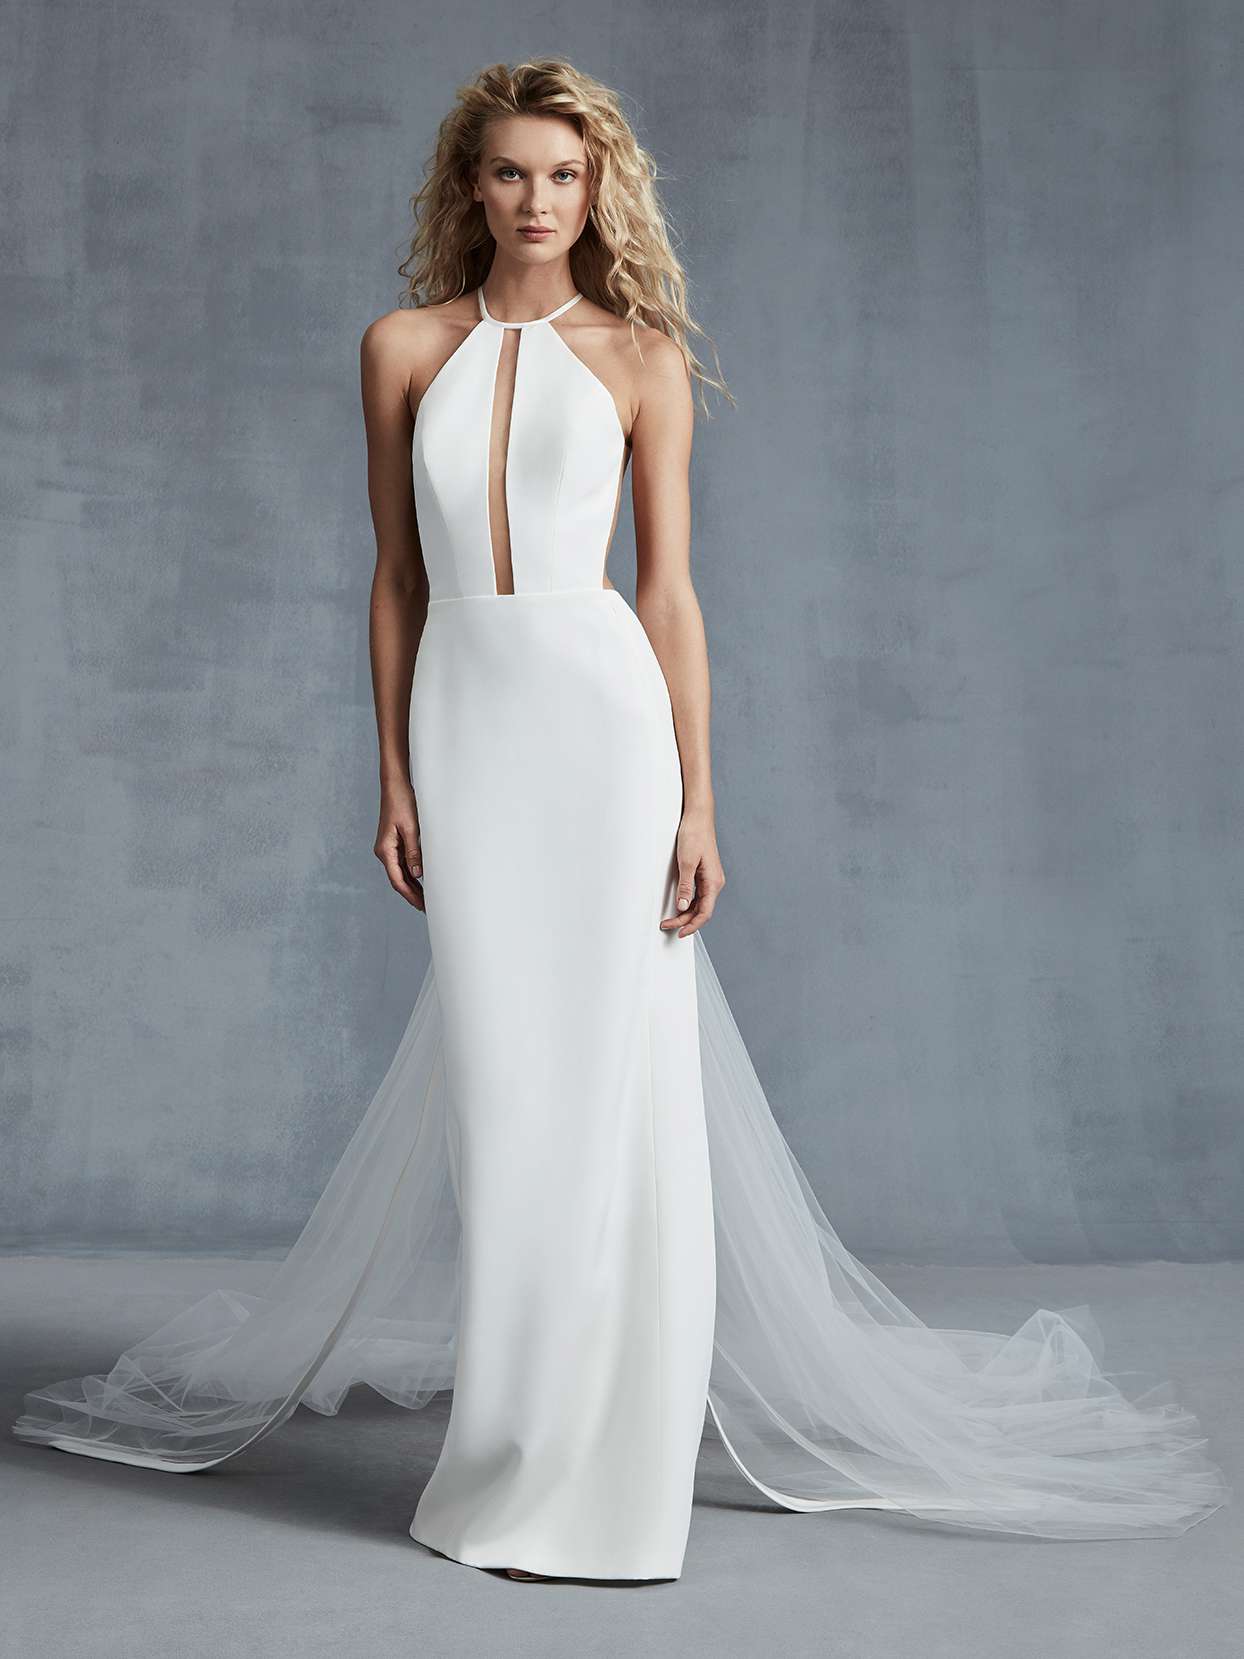 Ines Di Santo Fall 2021 Wedding Dress ...